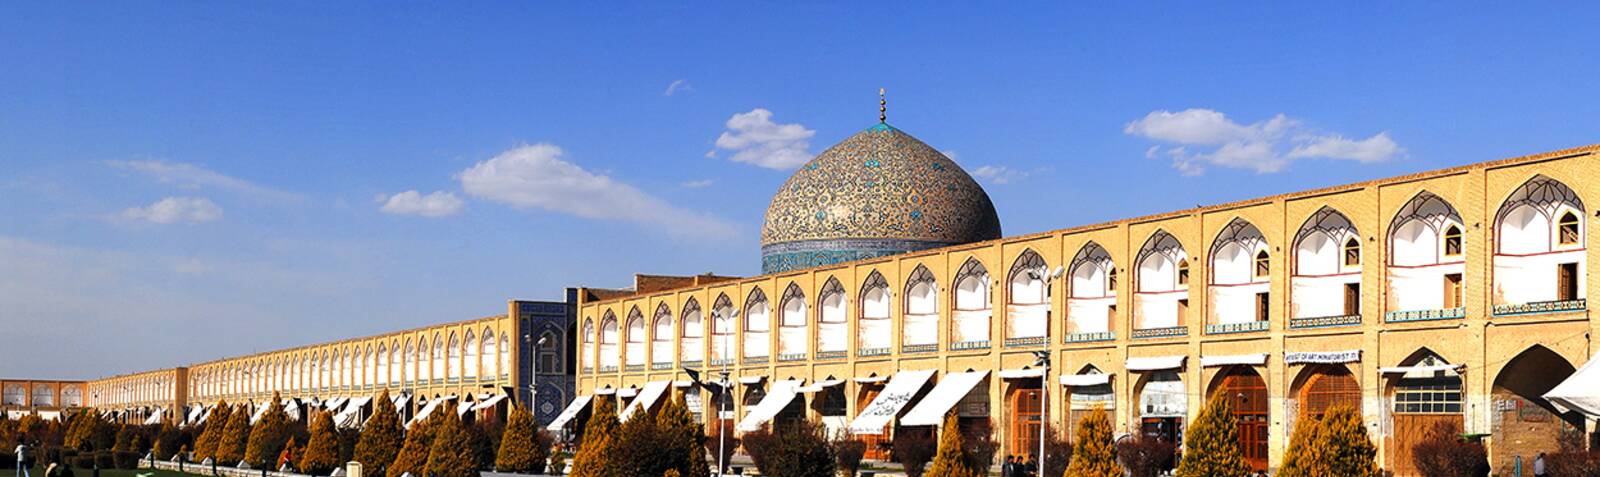 Meidan Emam, Isfahan